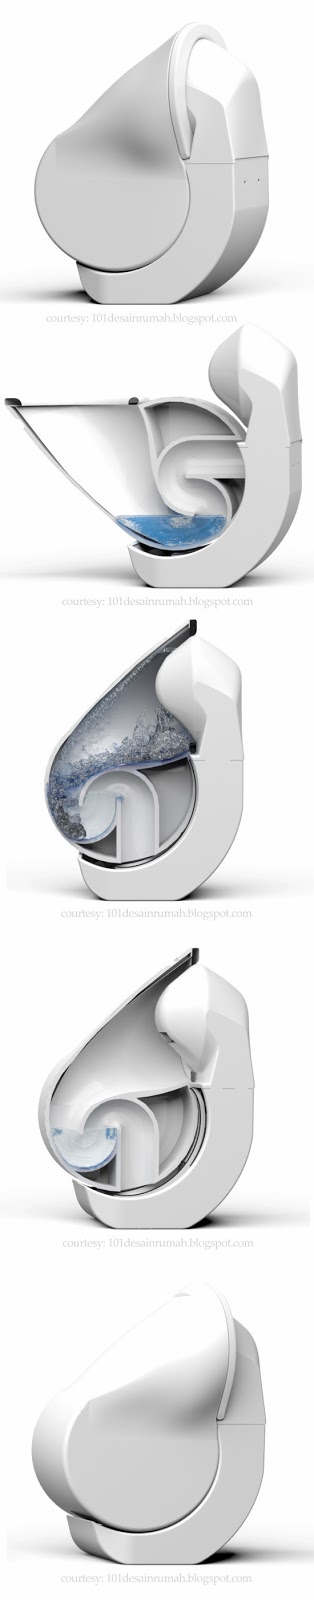 Desain Rumah Ideal: IOTA Toilet: Desain Toilet Minimalis 